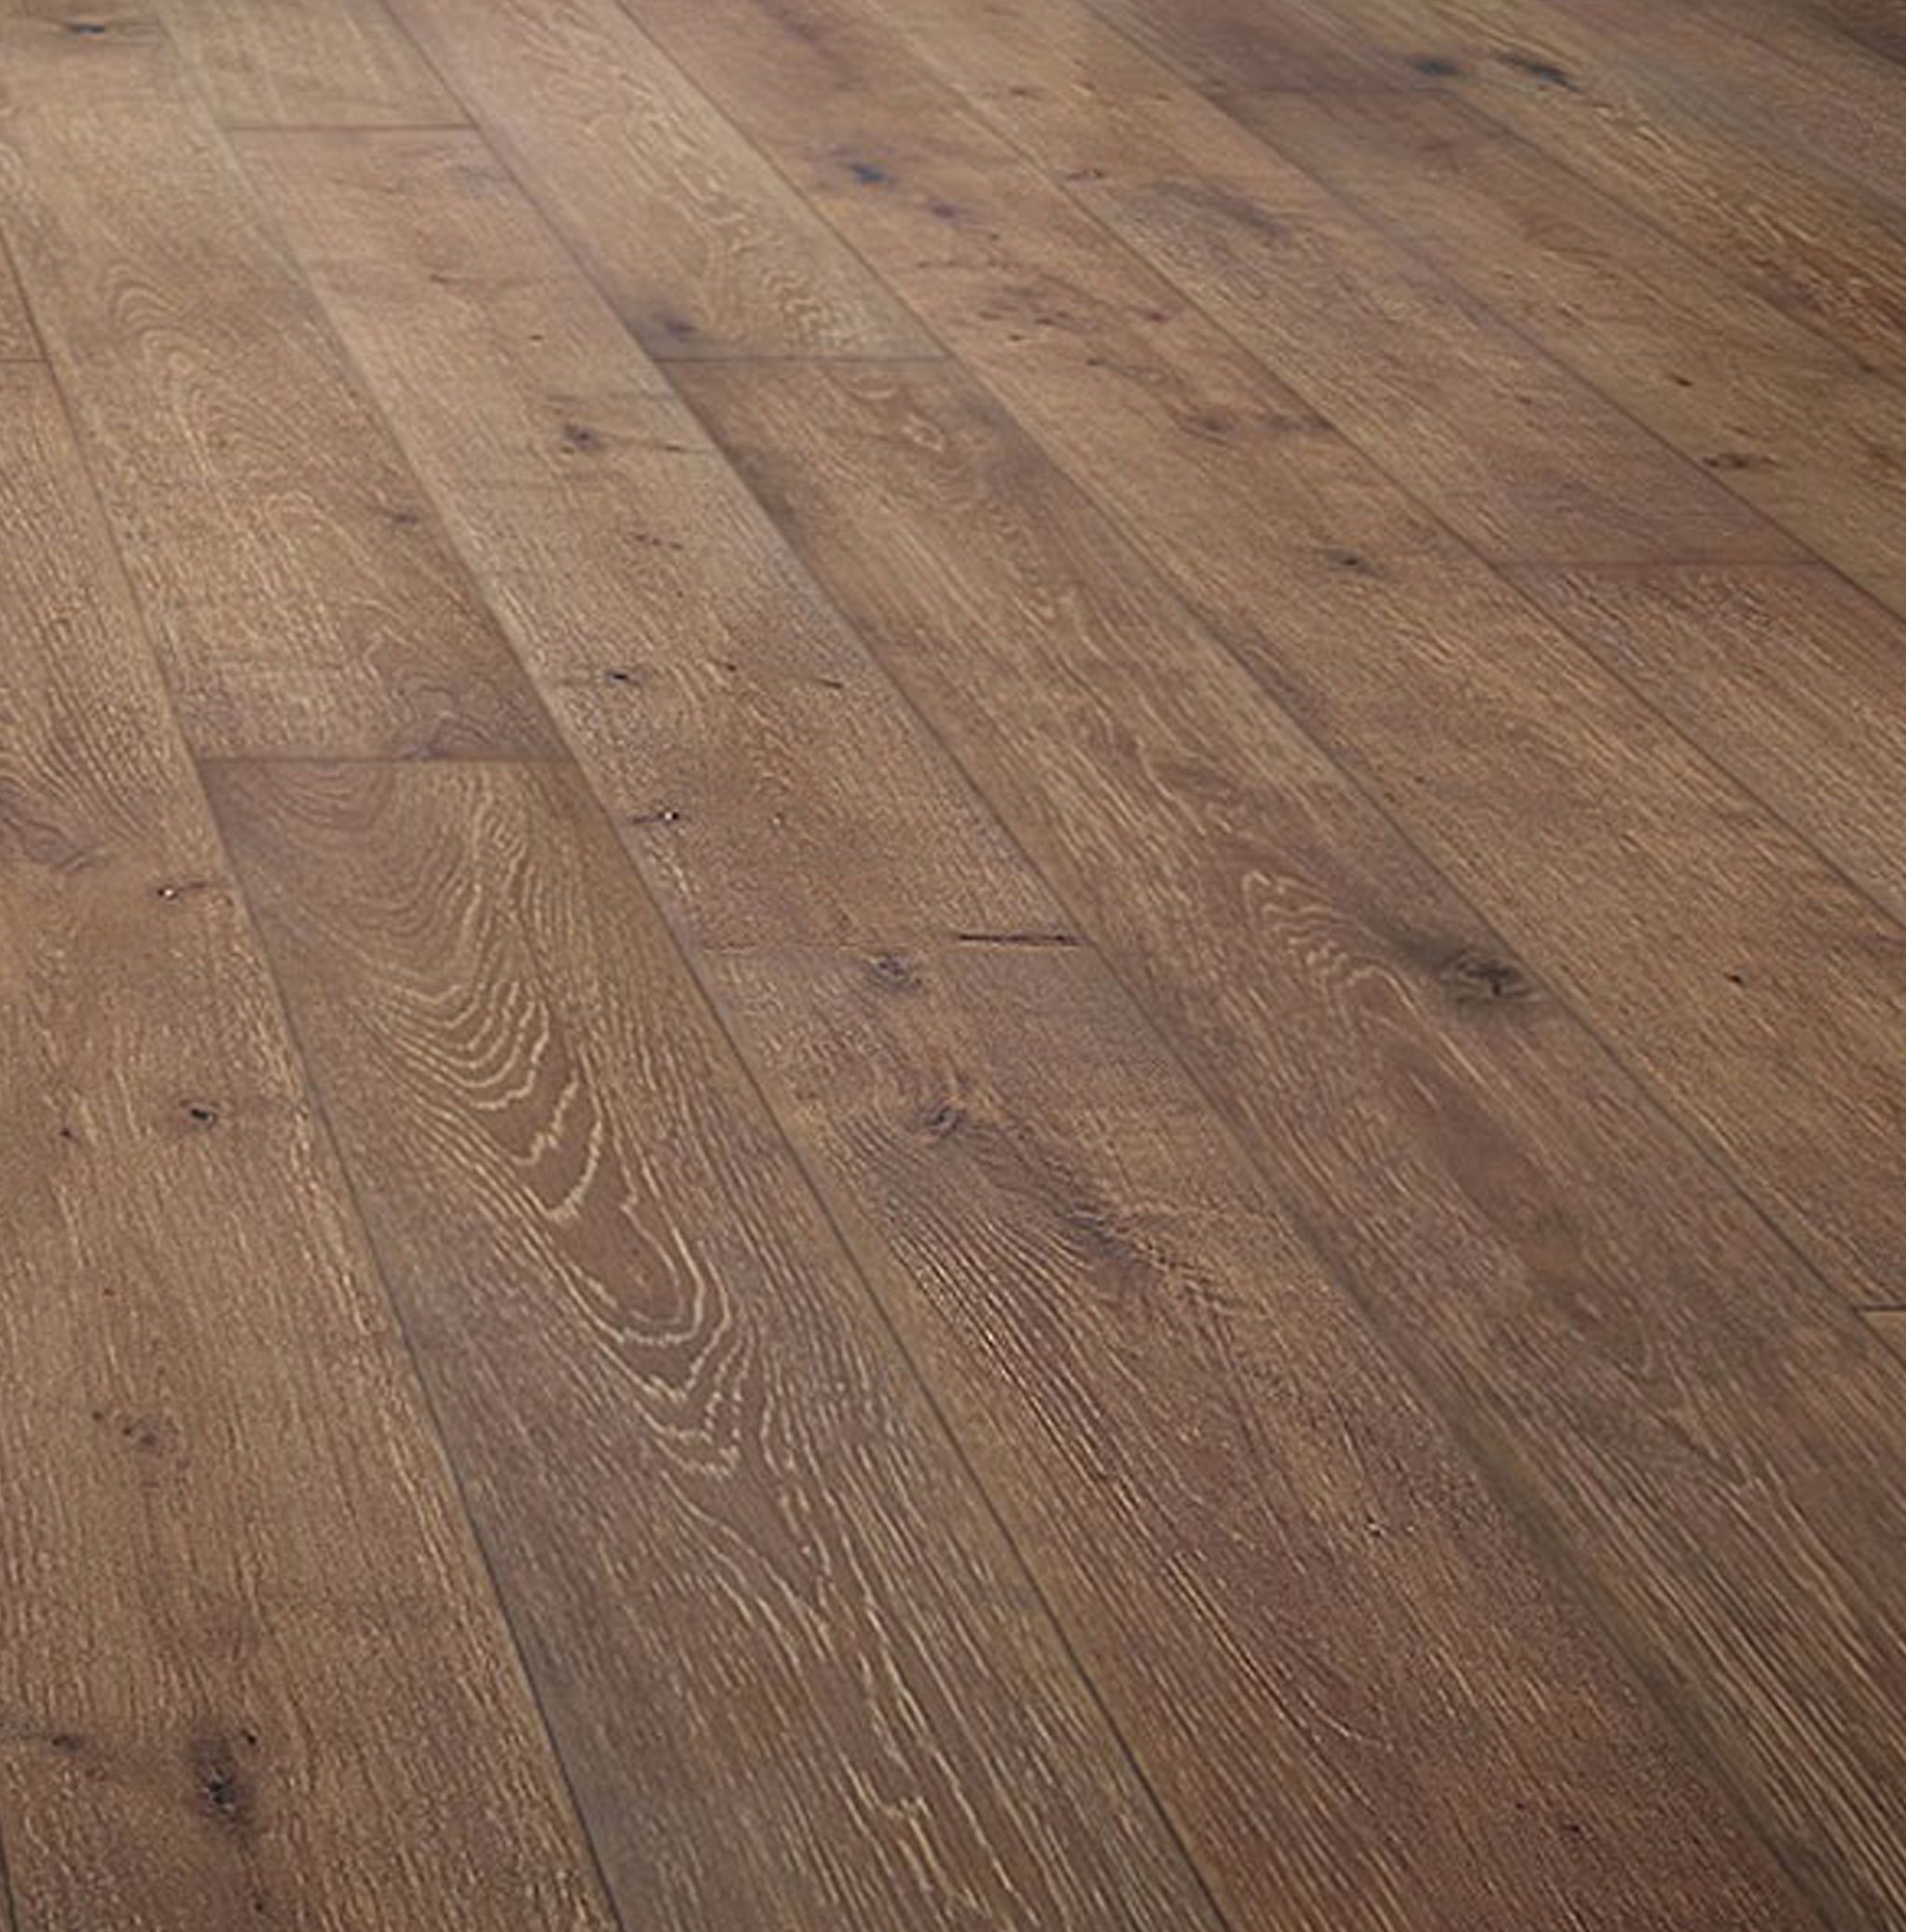 engineered, white oak, wood, plank flooring